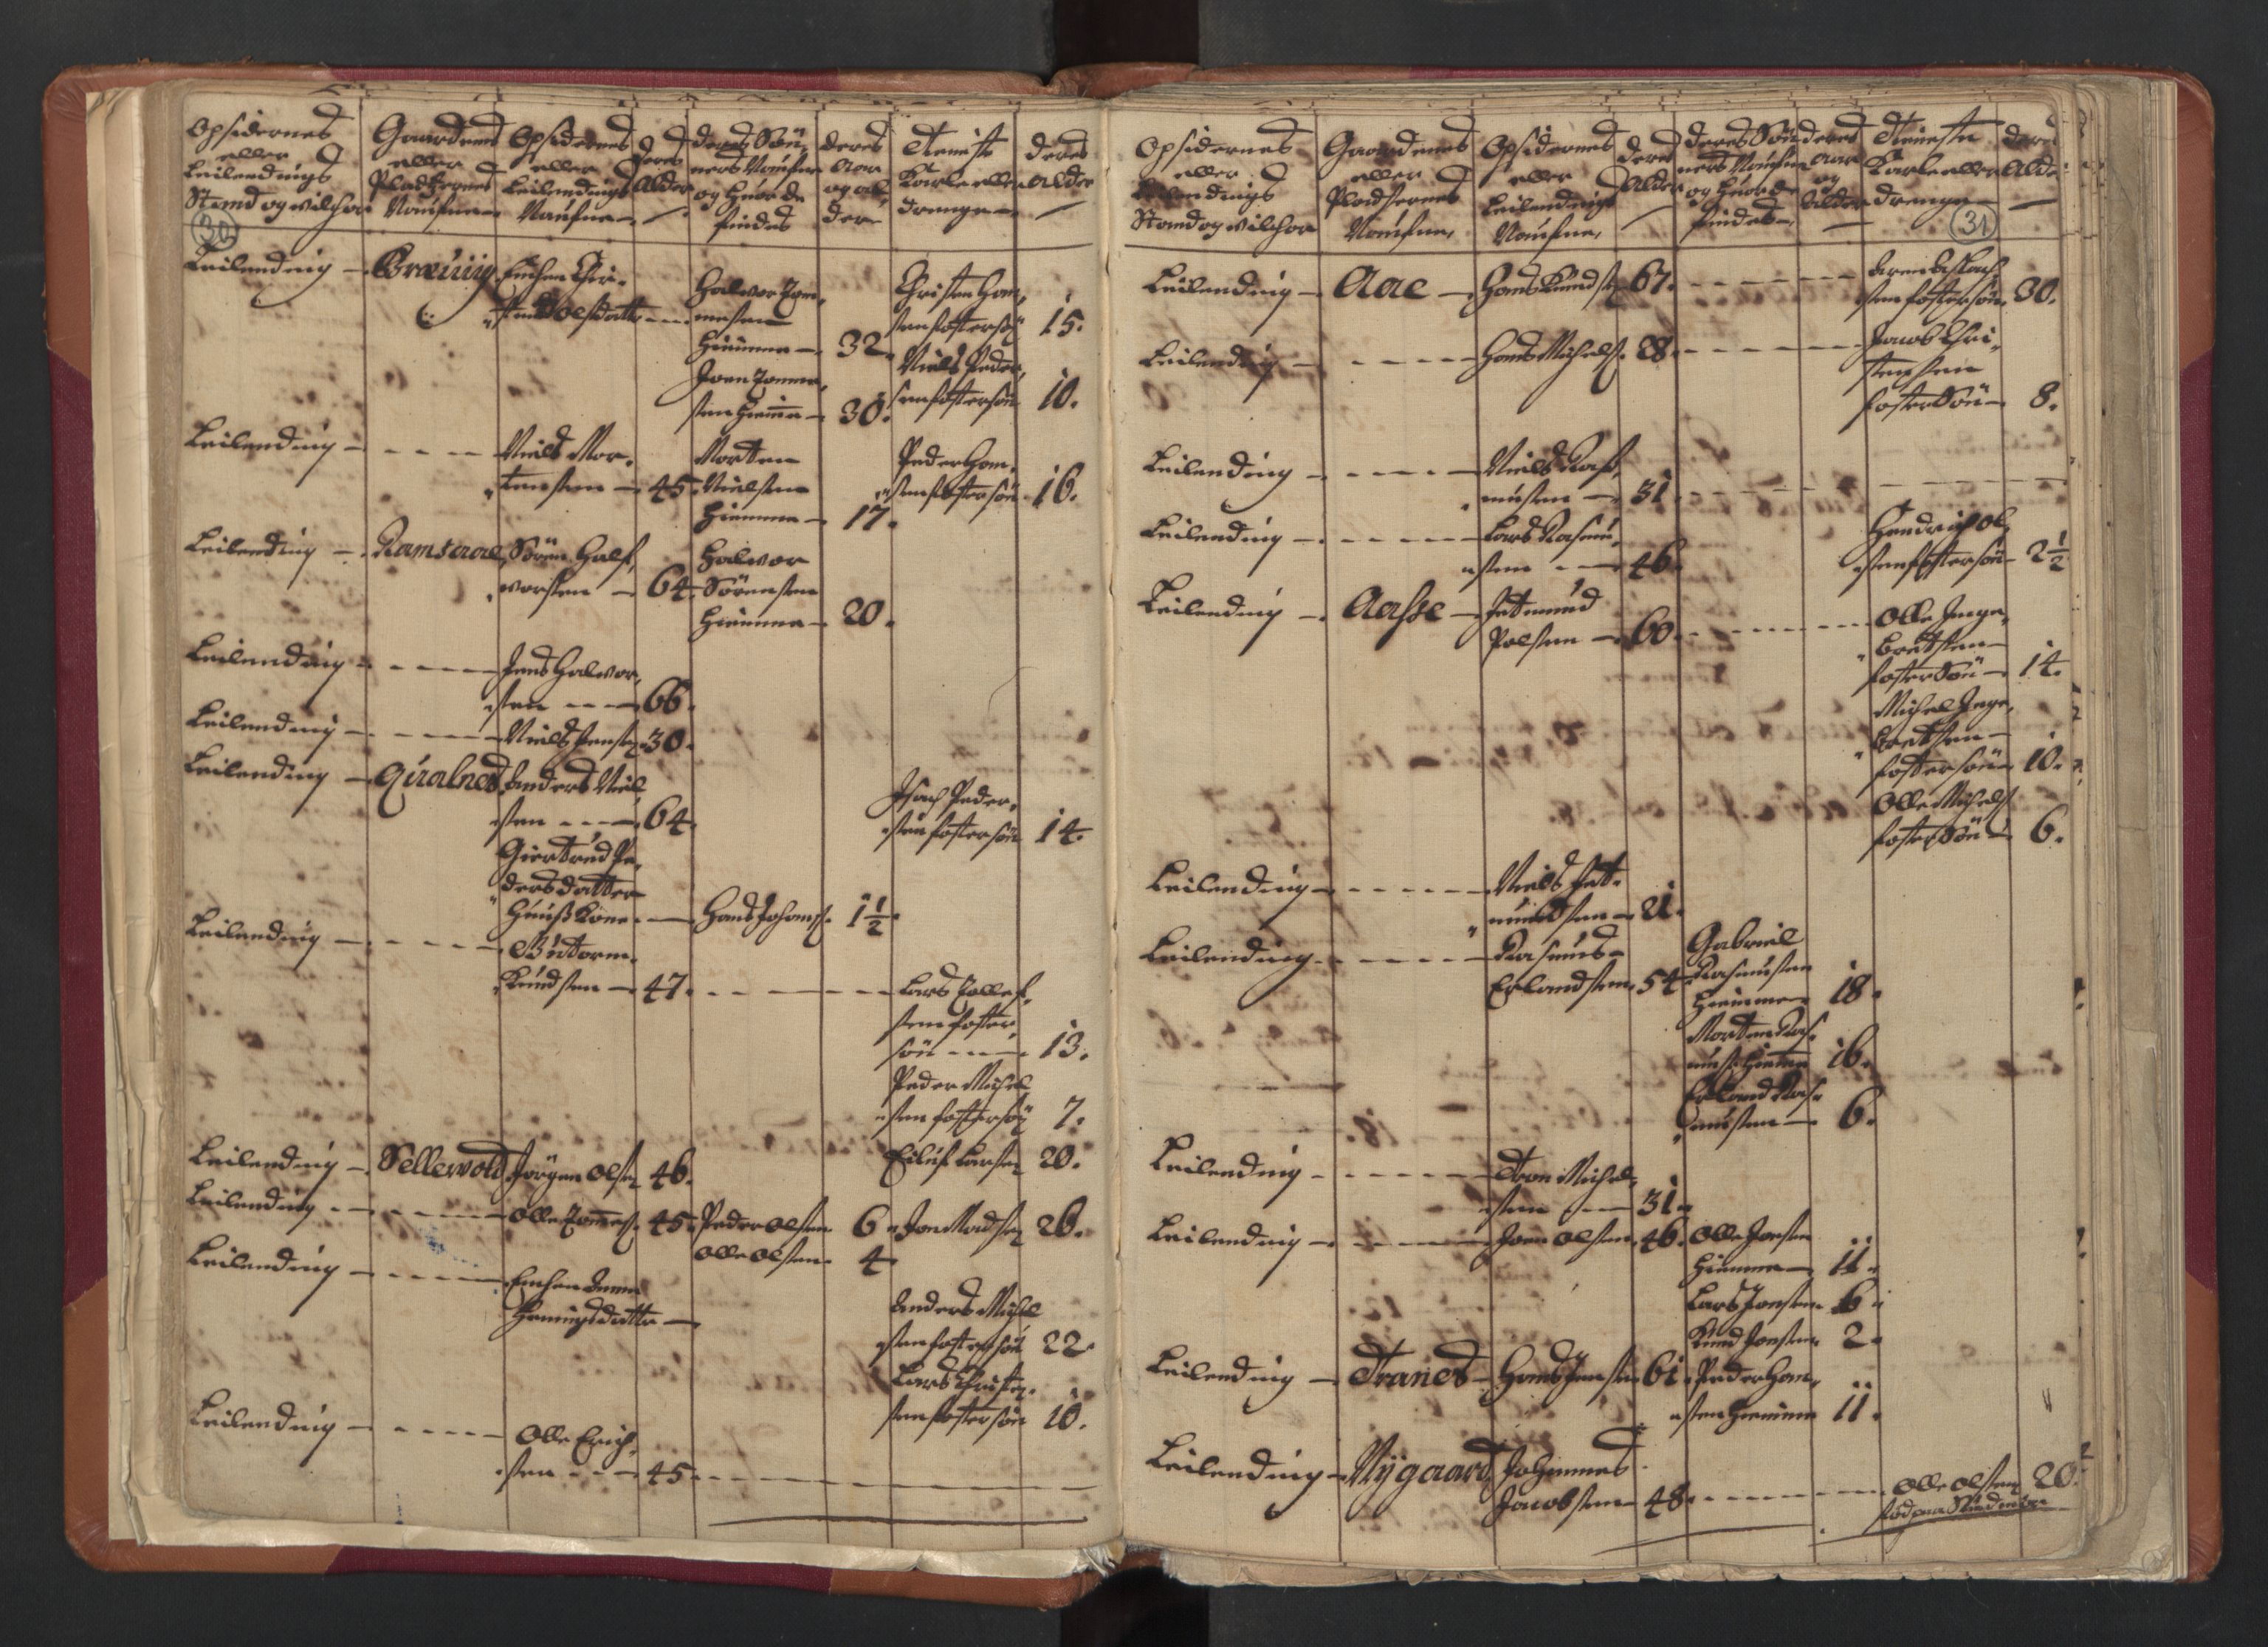 RA, Manntallet 1701, nr. 18: Vesterålen, Andenes og Lofoten fogderi, 1701, s. 30-31